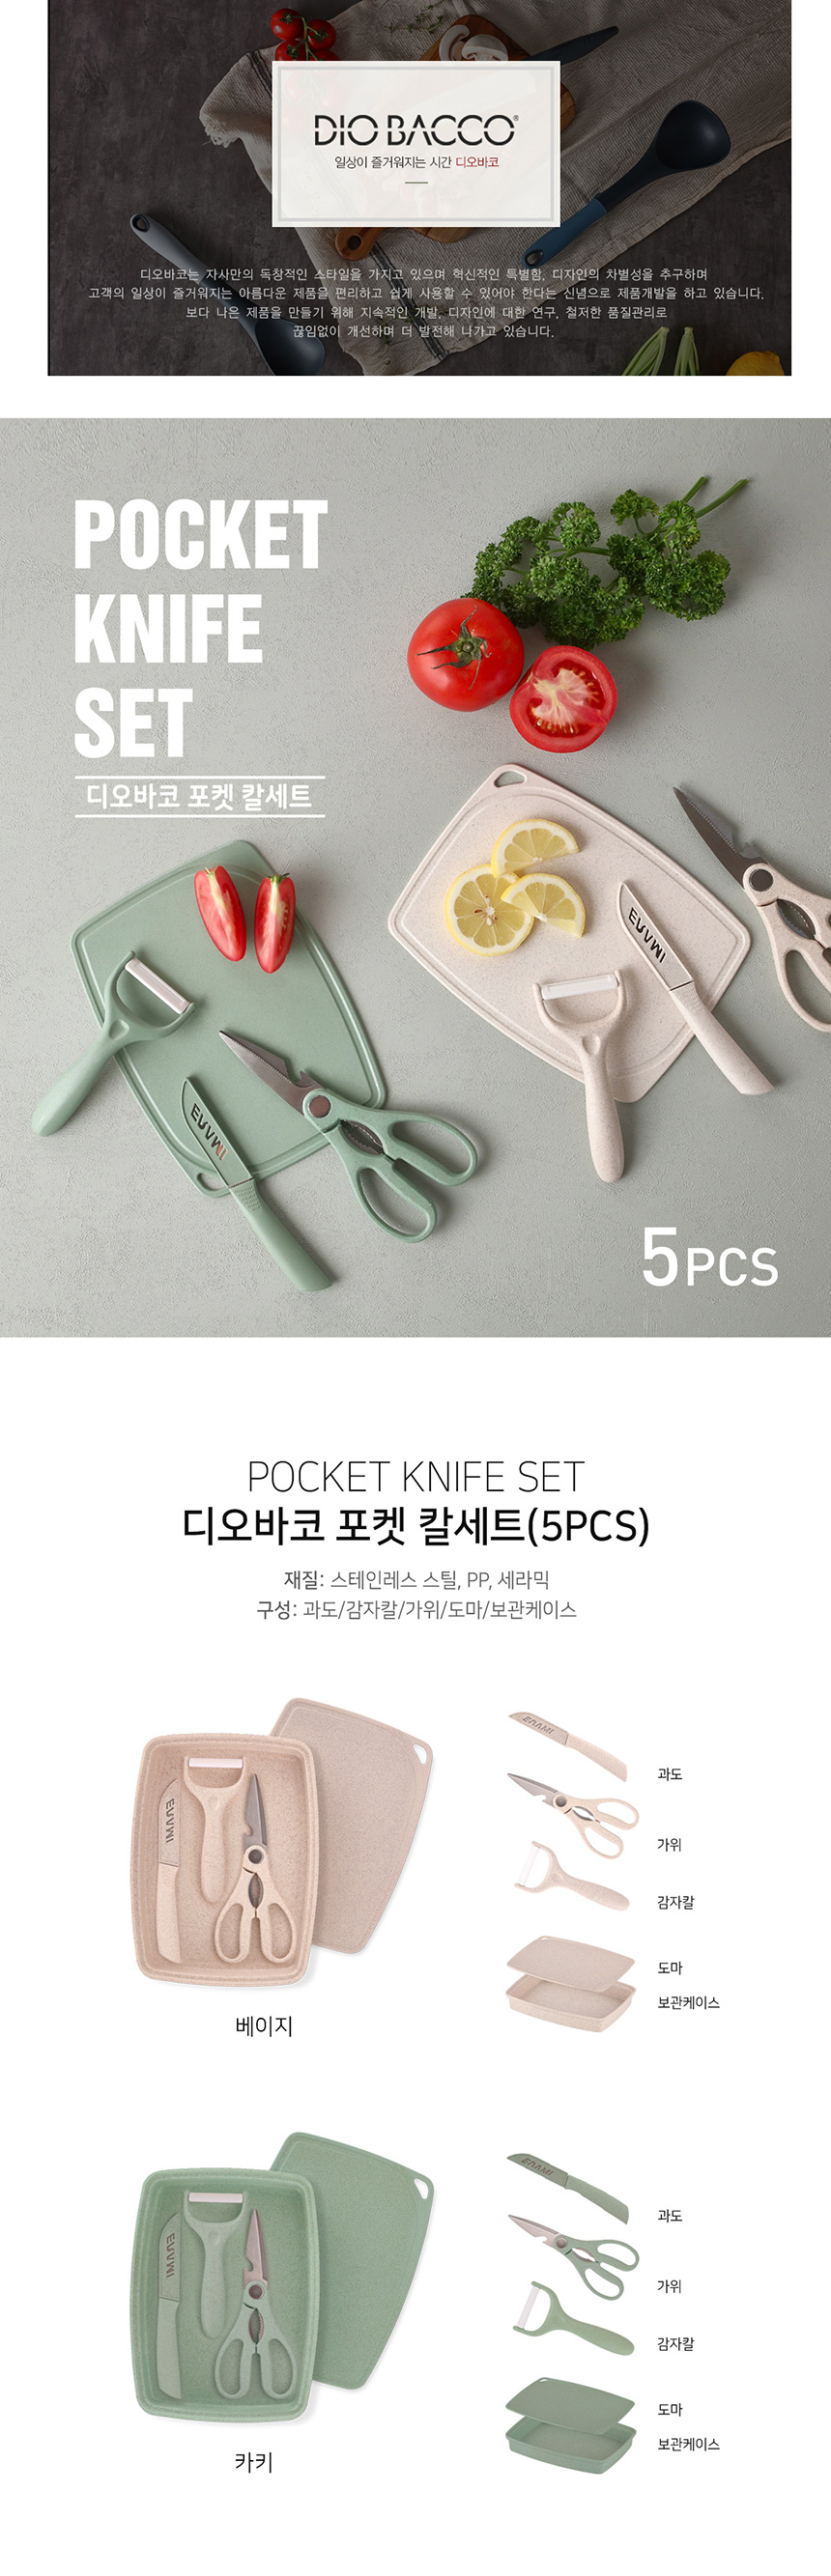 DIOBACCO_Pocket-Knife-Set_prev_01_141210.jpg